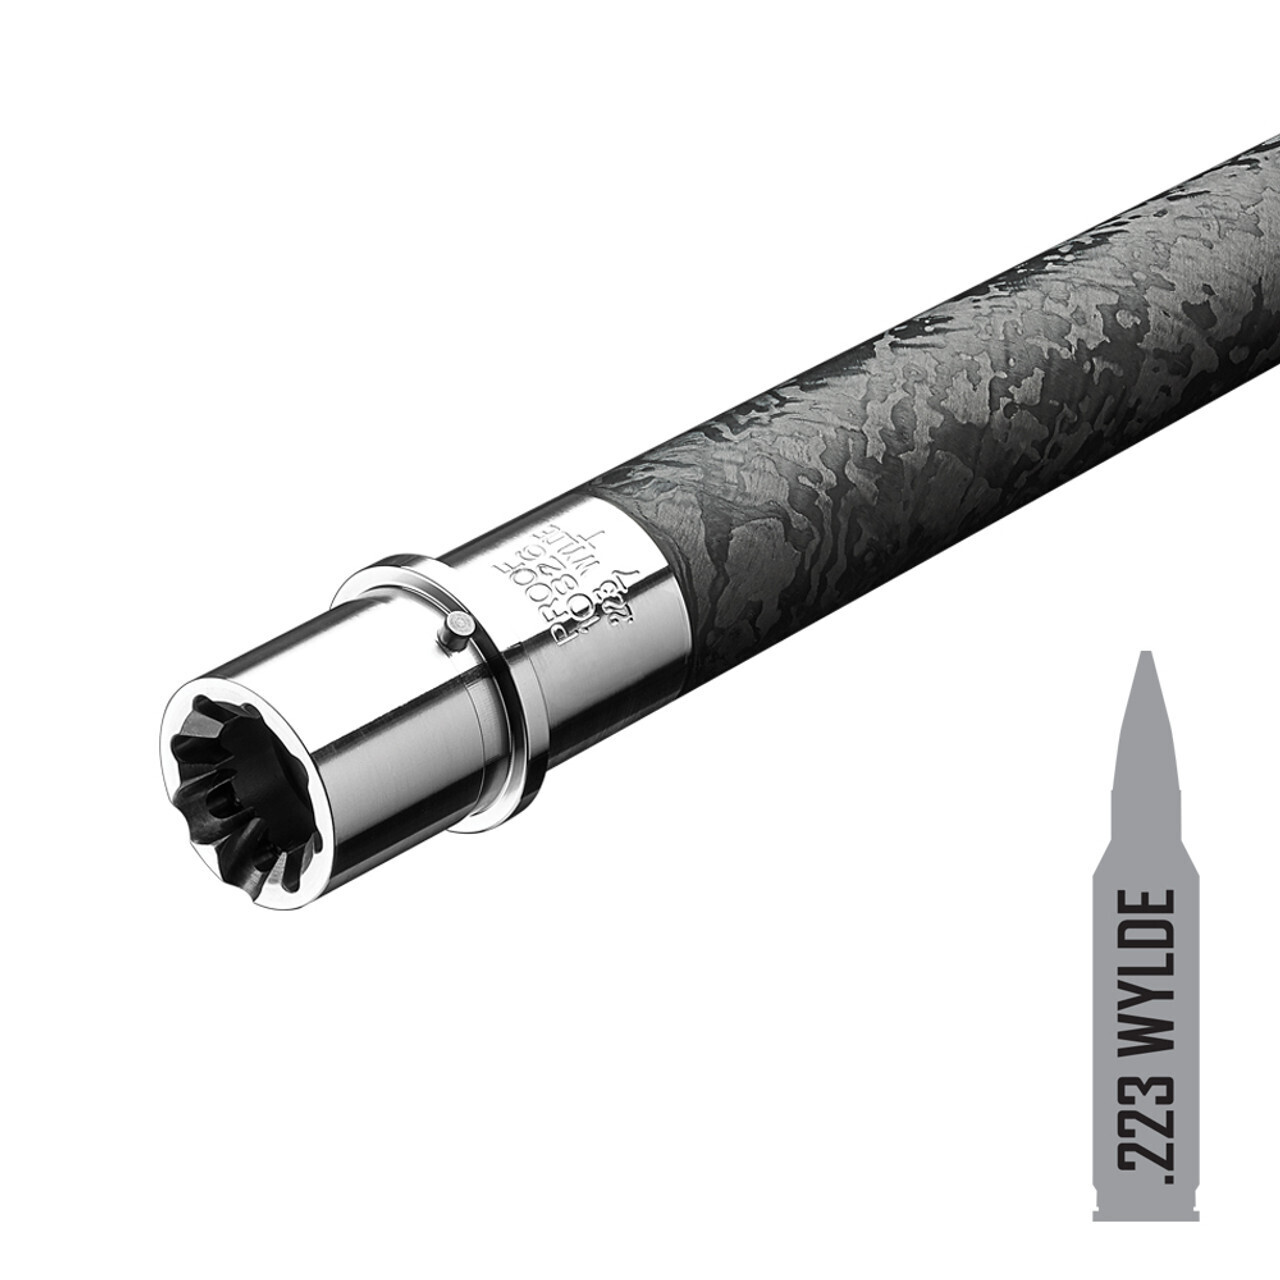 Proof Research 223 Wylde 18" 1:8 twist Carbon Fiber Barrel Rifle Length